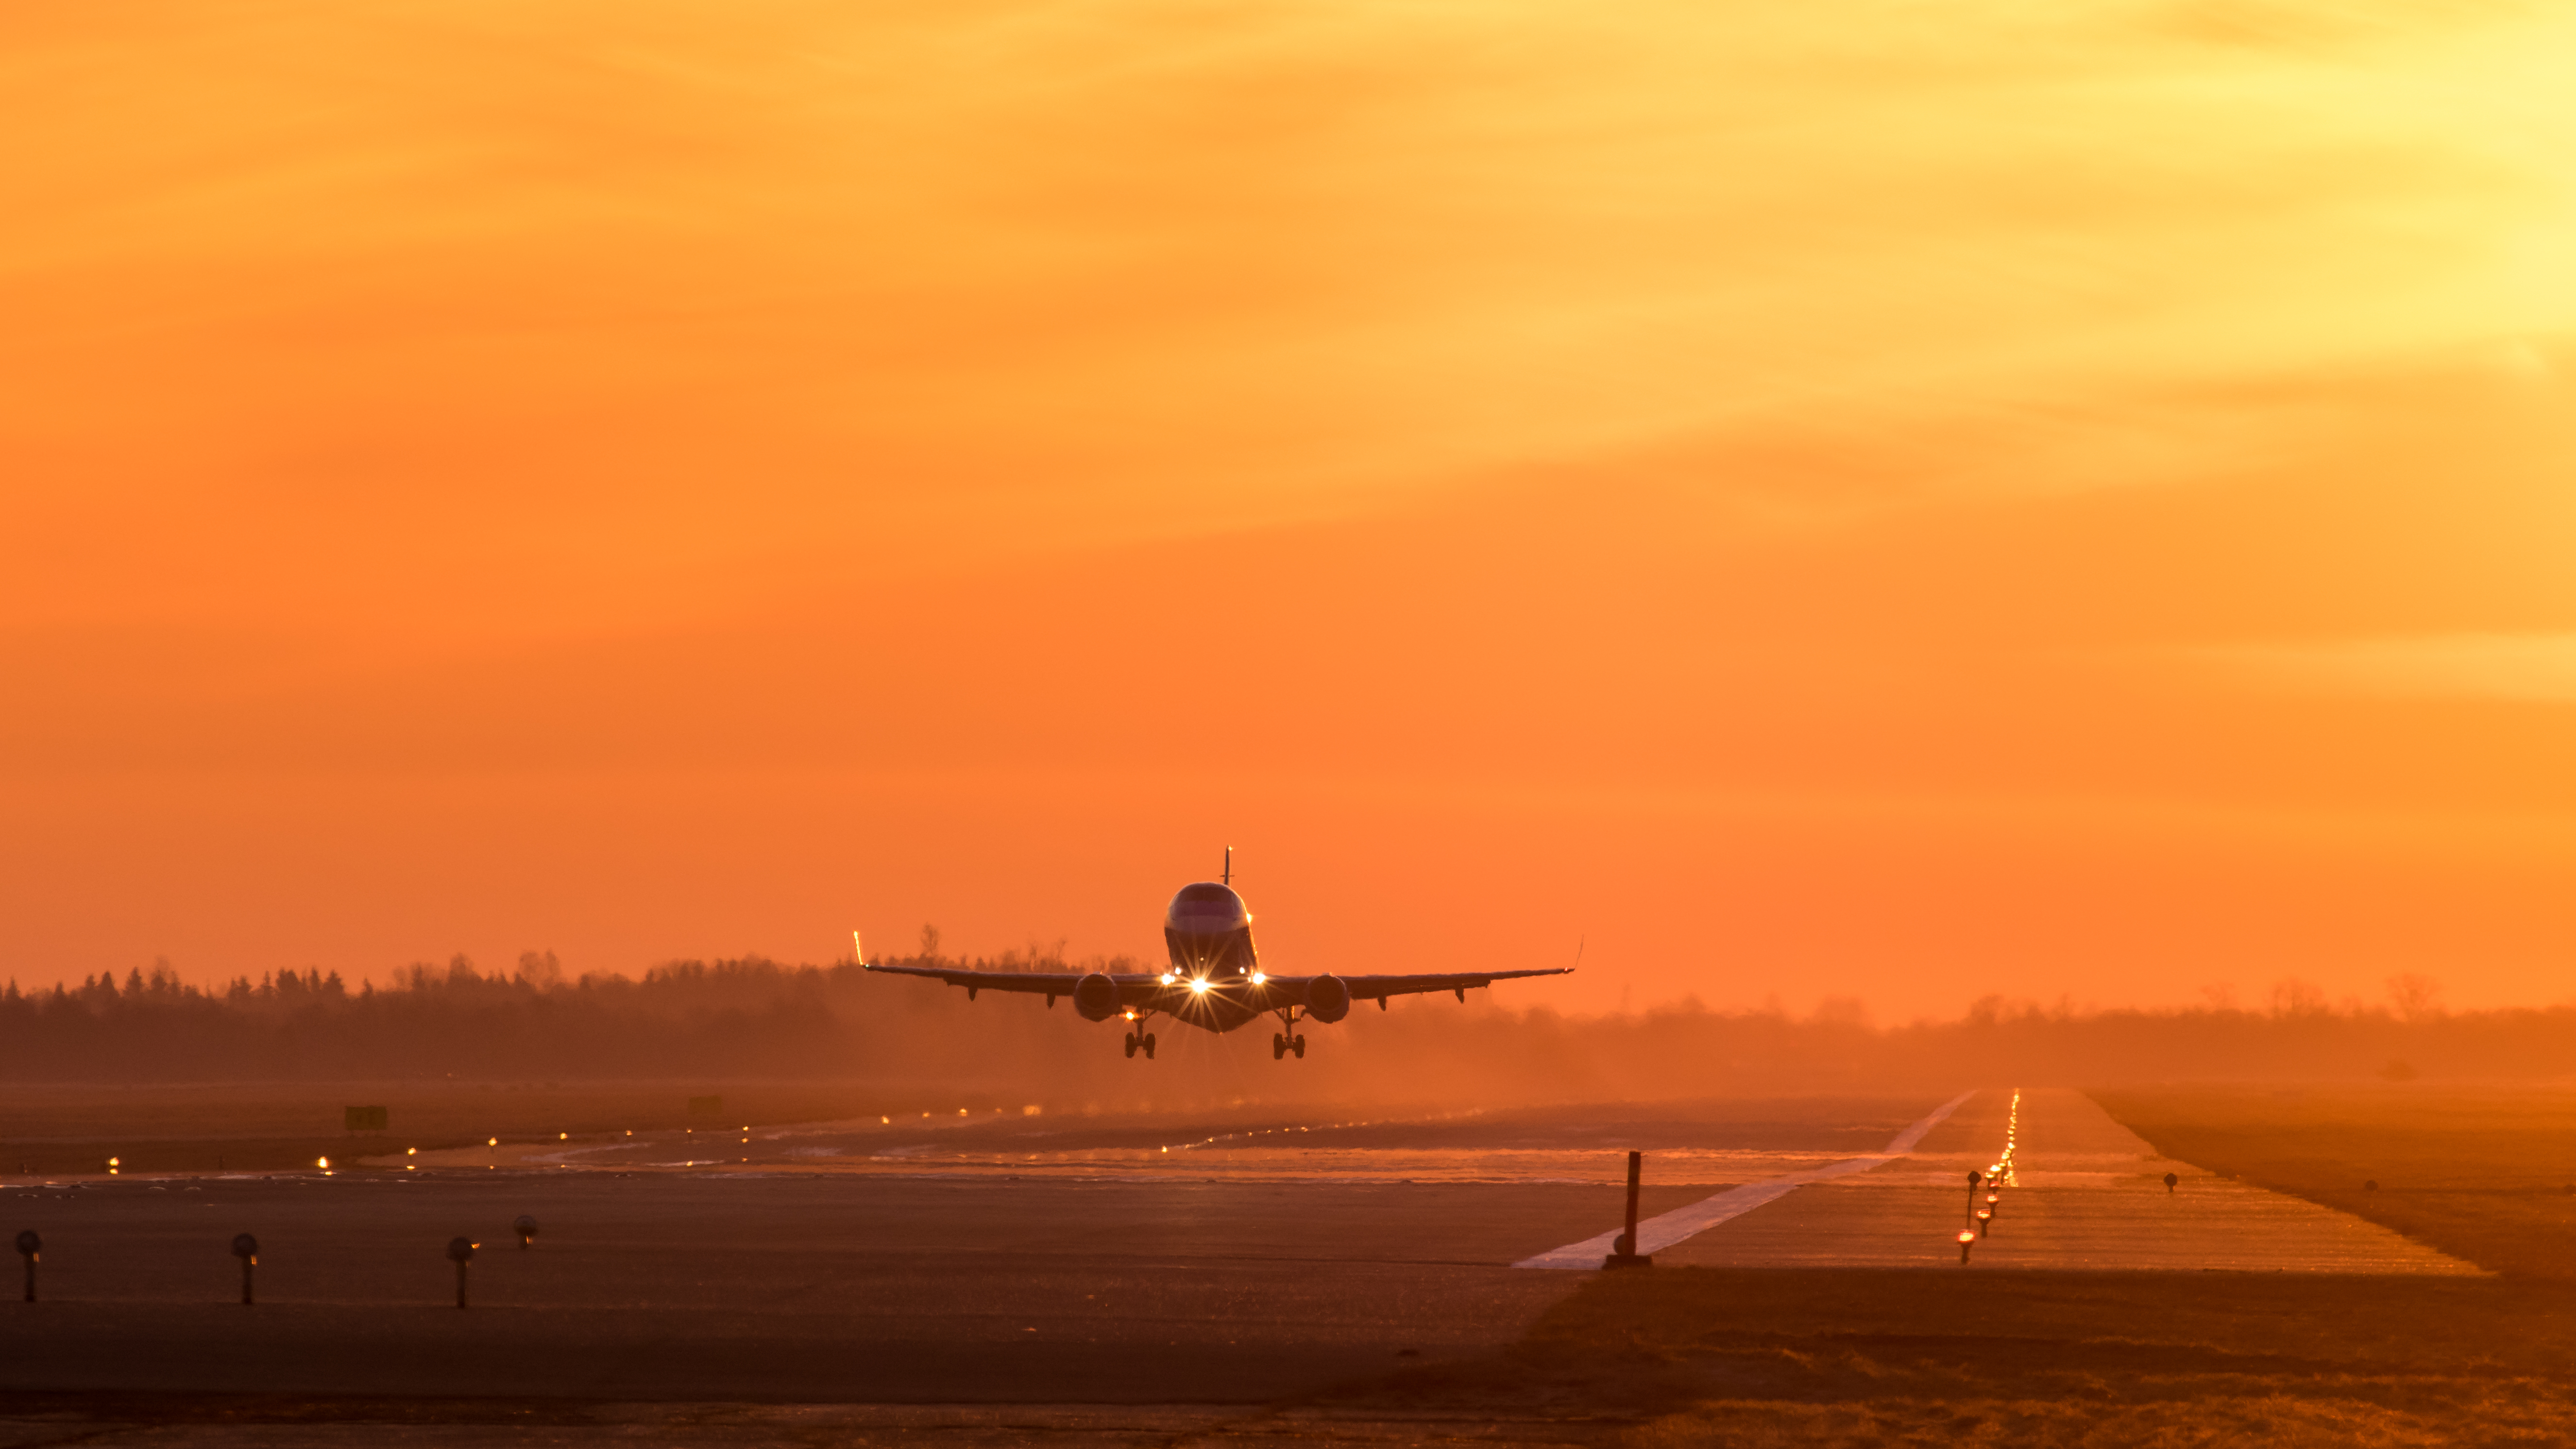 Plane landing in estonian airport in the sunset